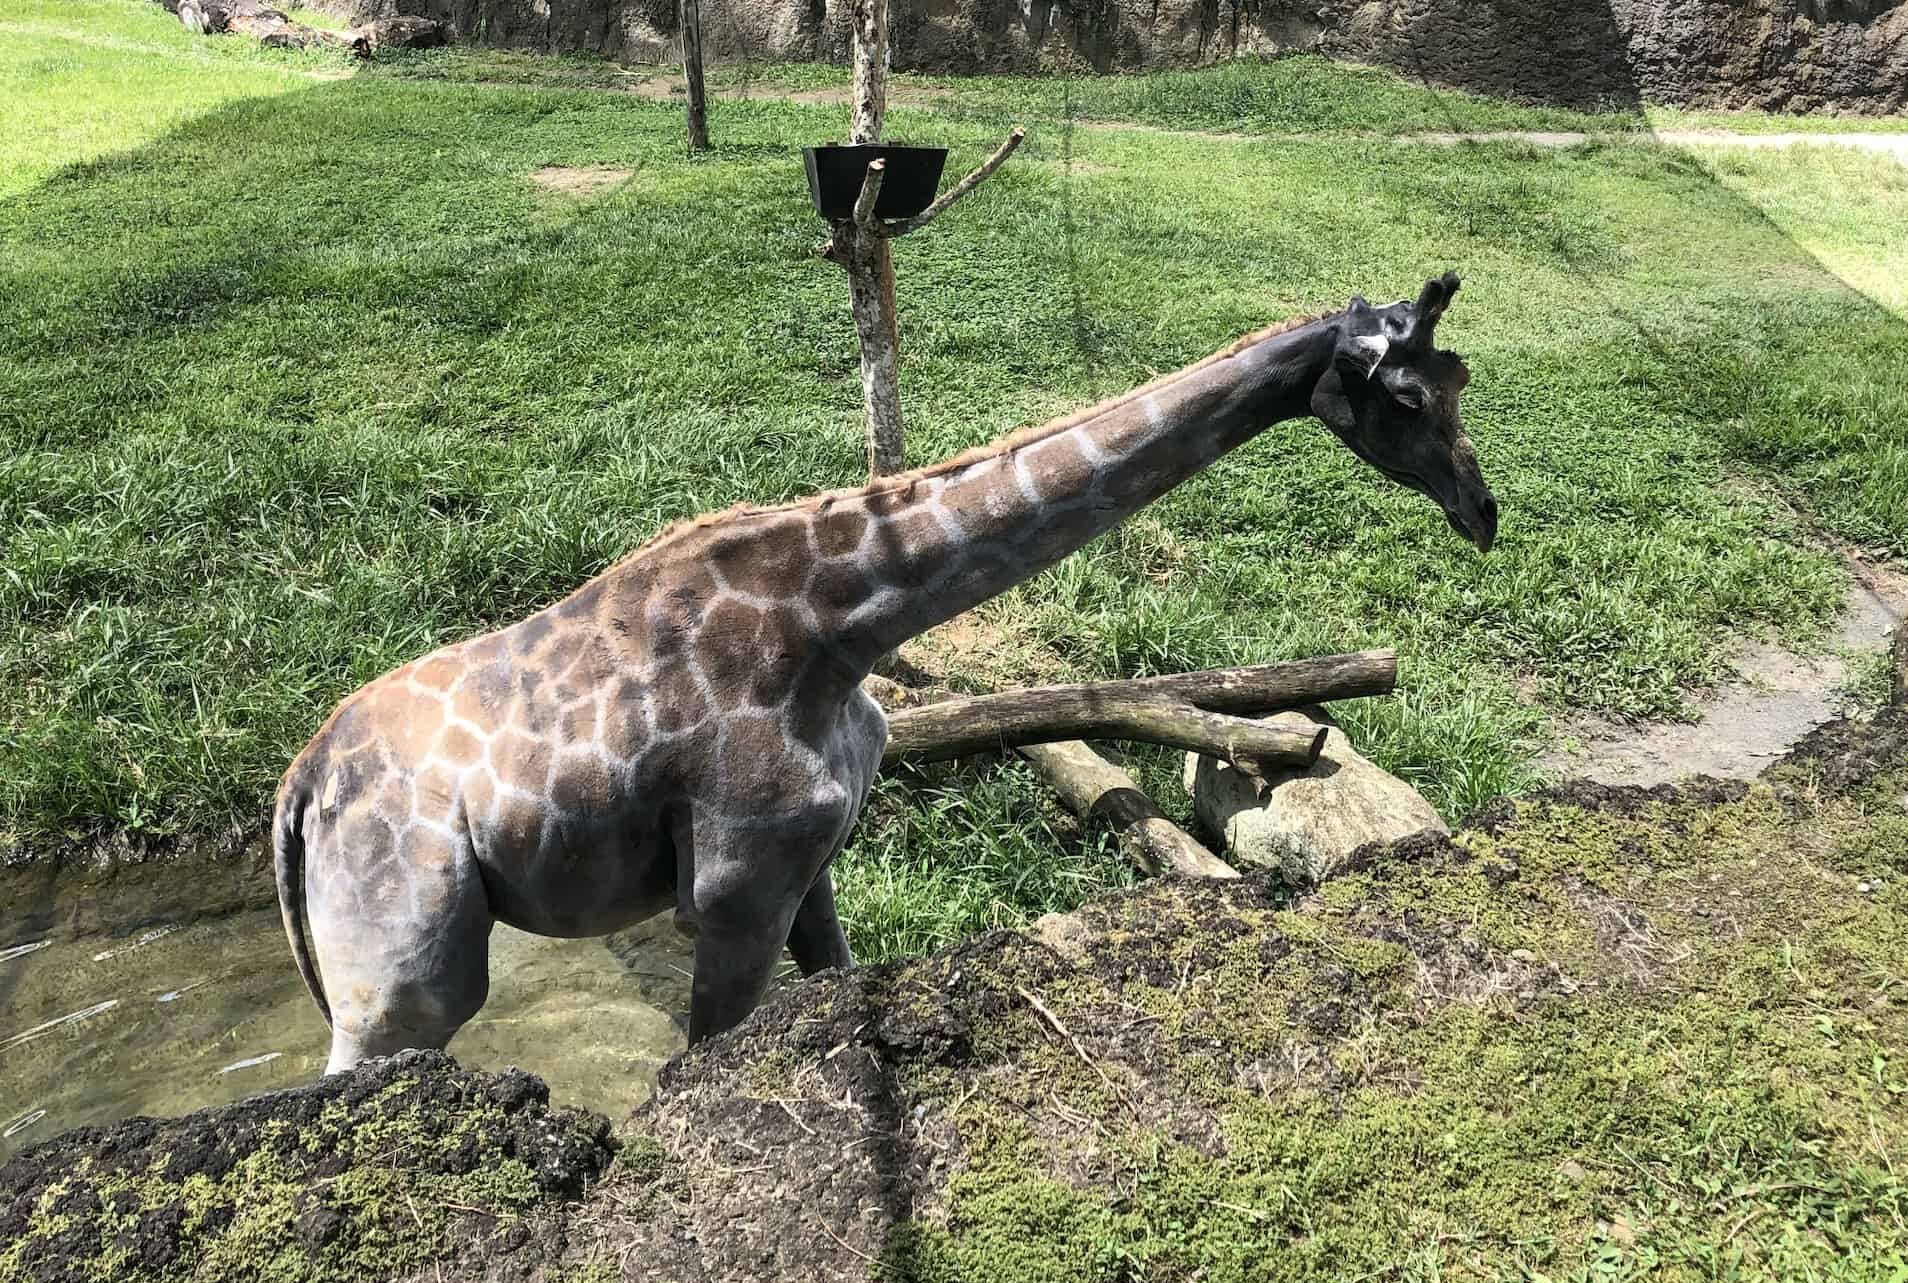 Adolescent giraffe